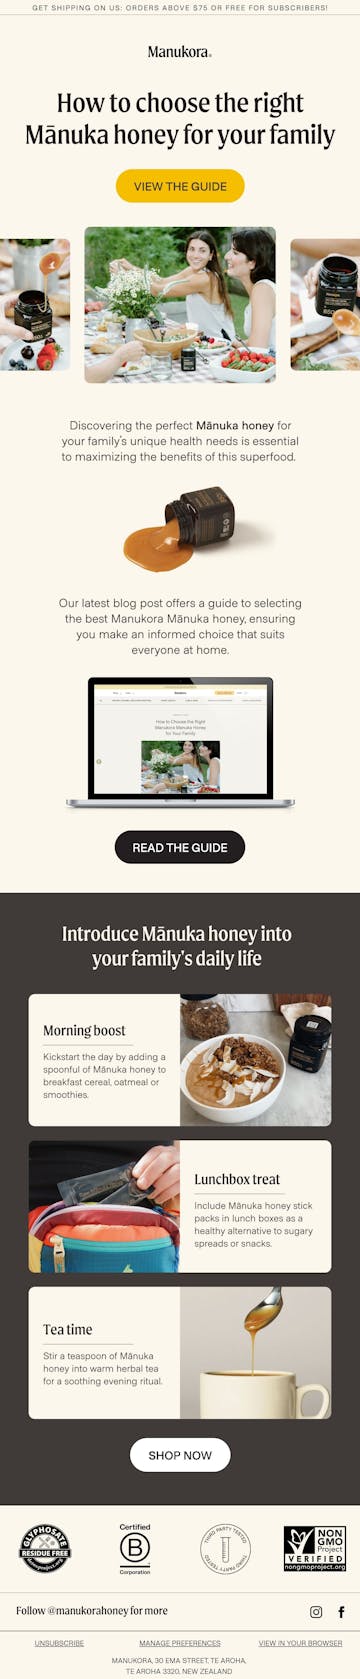 Manukora Email Design Thumbnail Preview